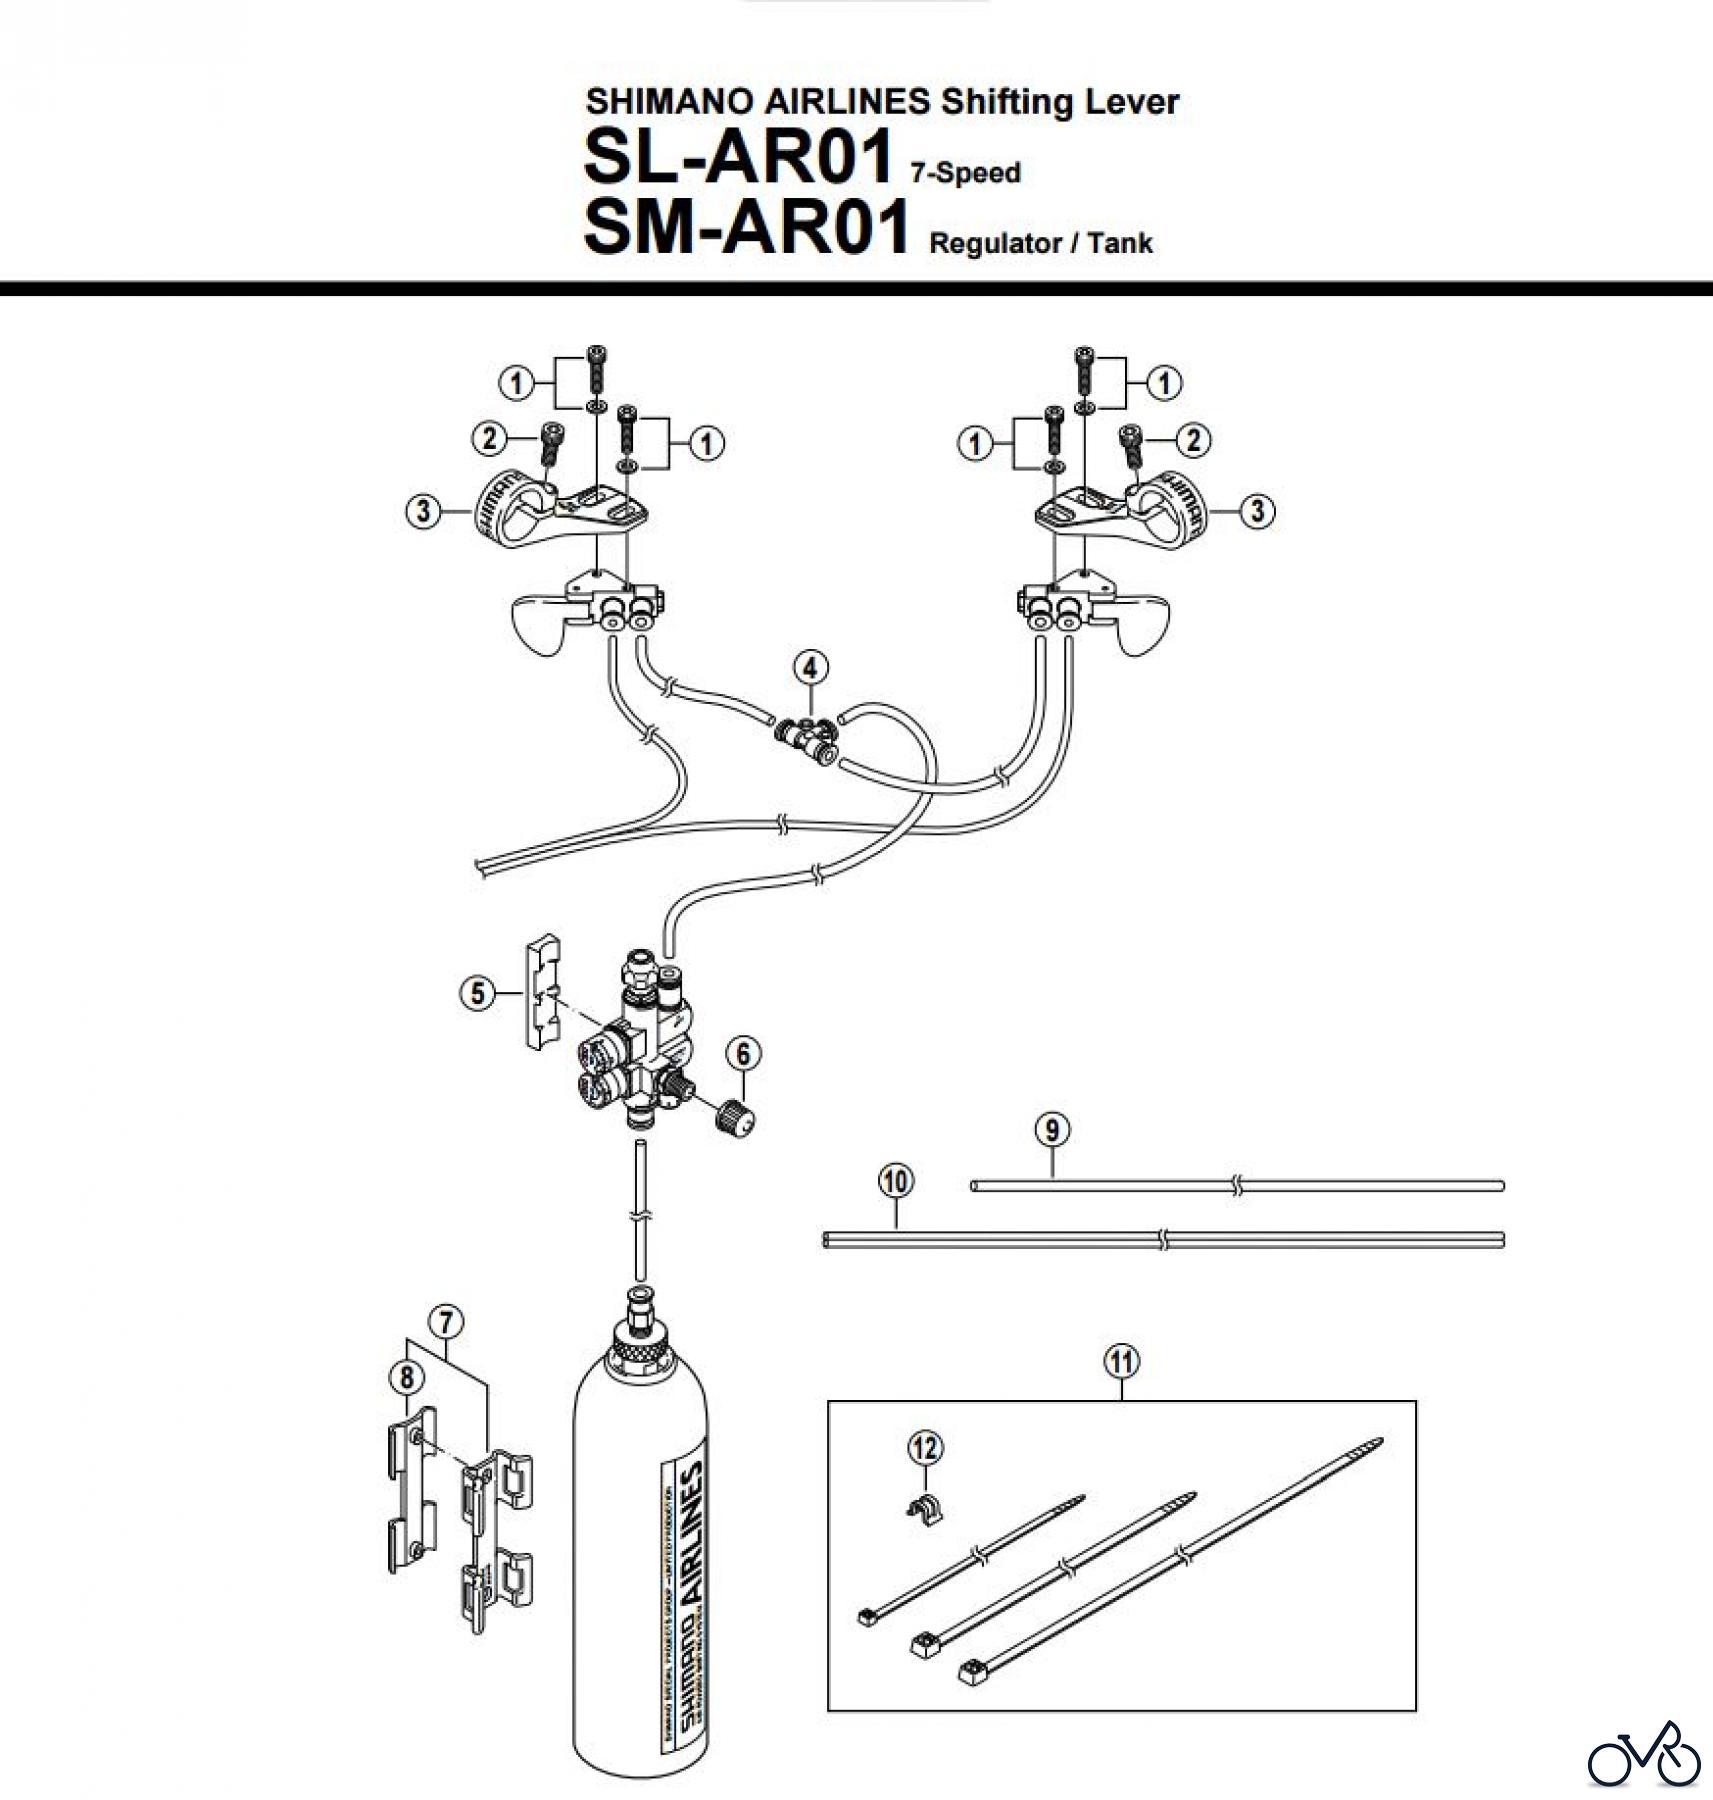  Shimano SL Shift Lever - Schalthebel SL-AR01 SHIMANO AIRLINES Shifting Lever